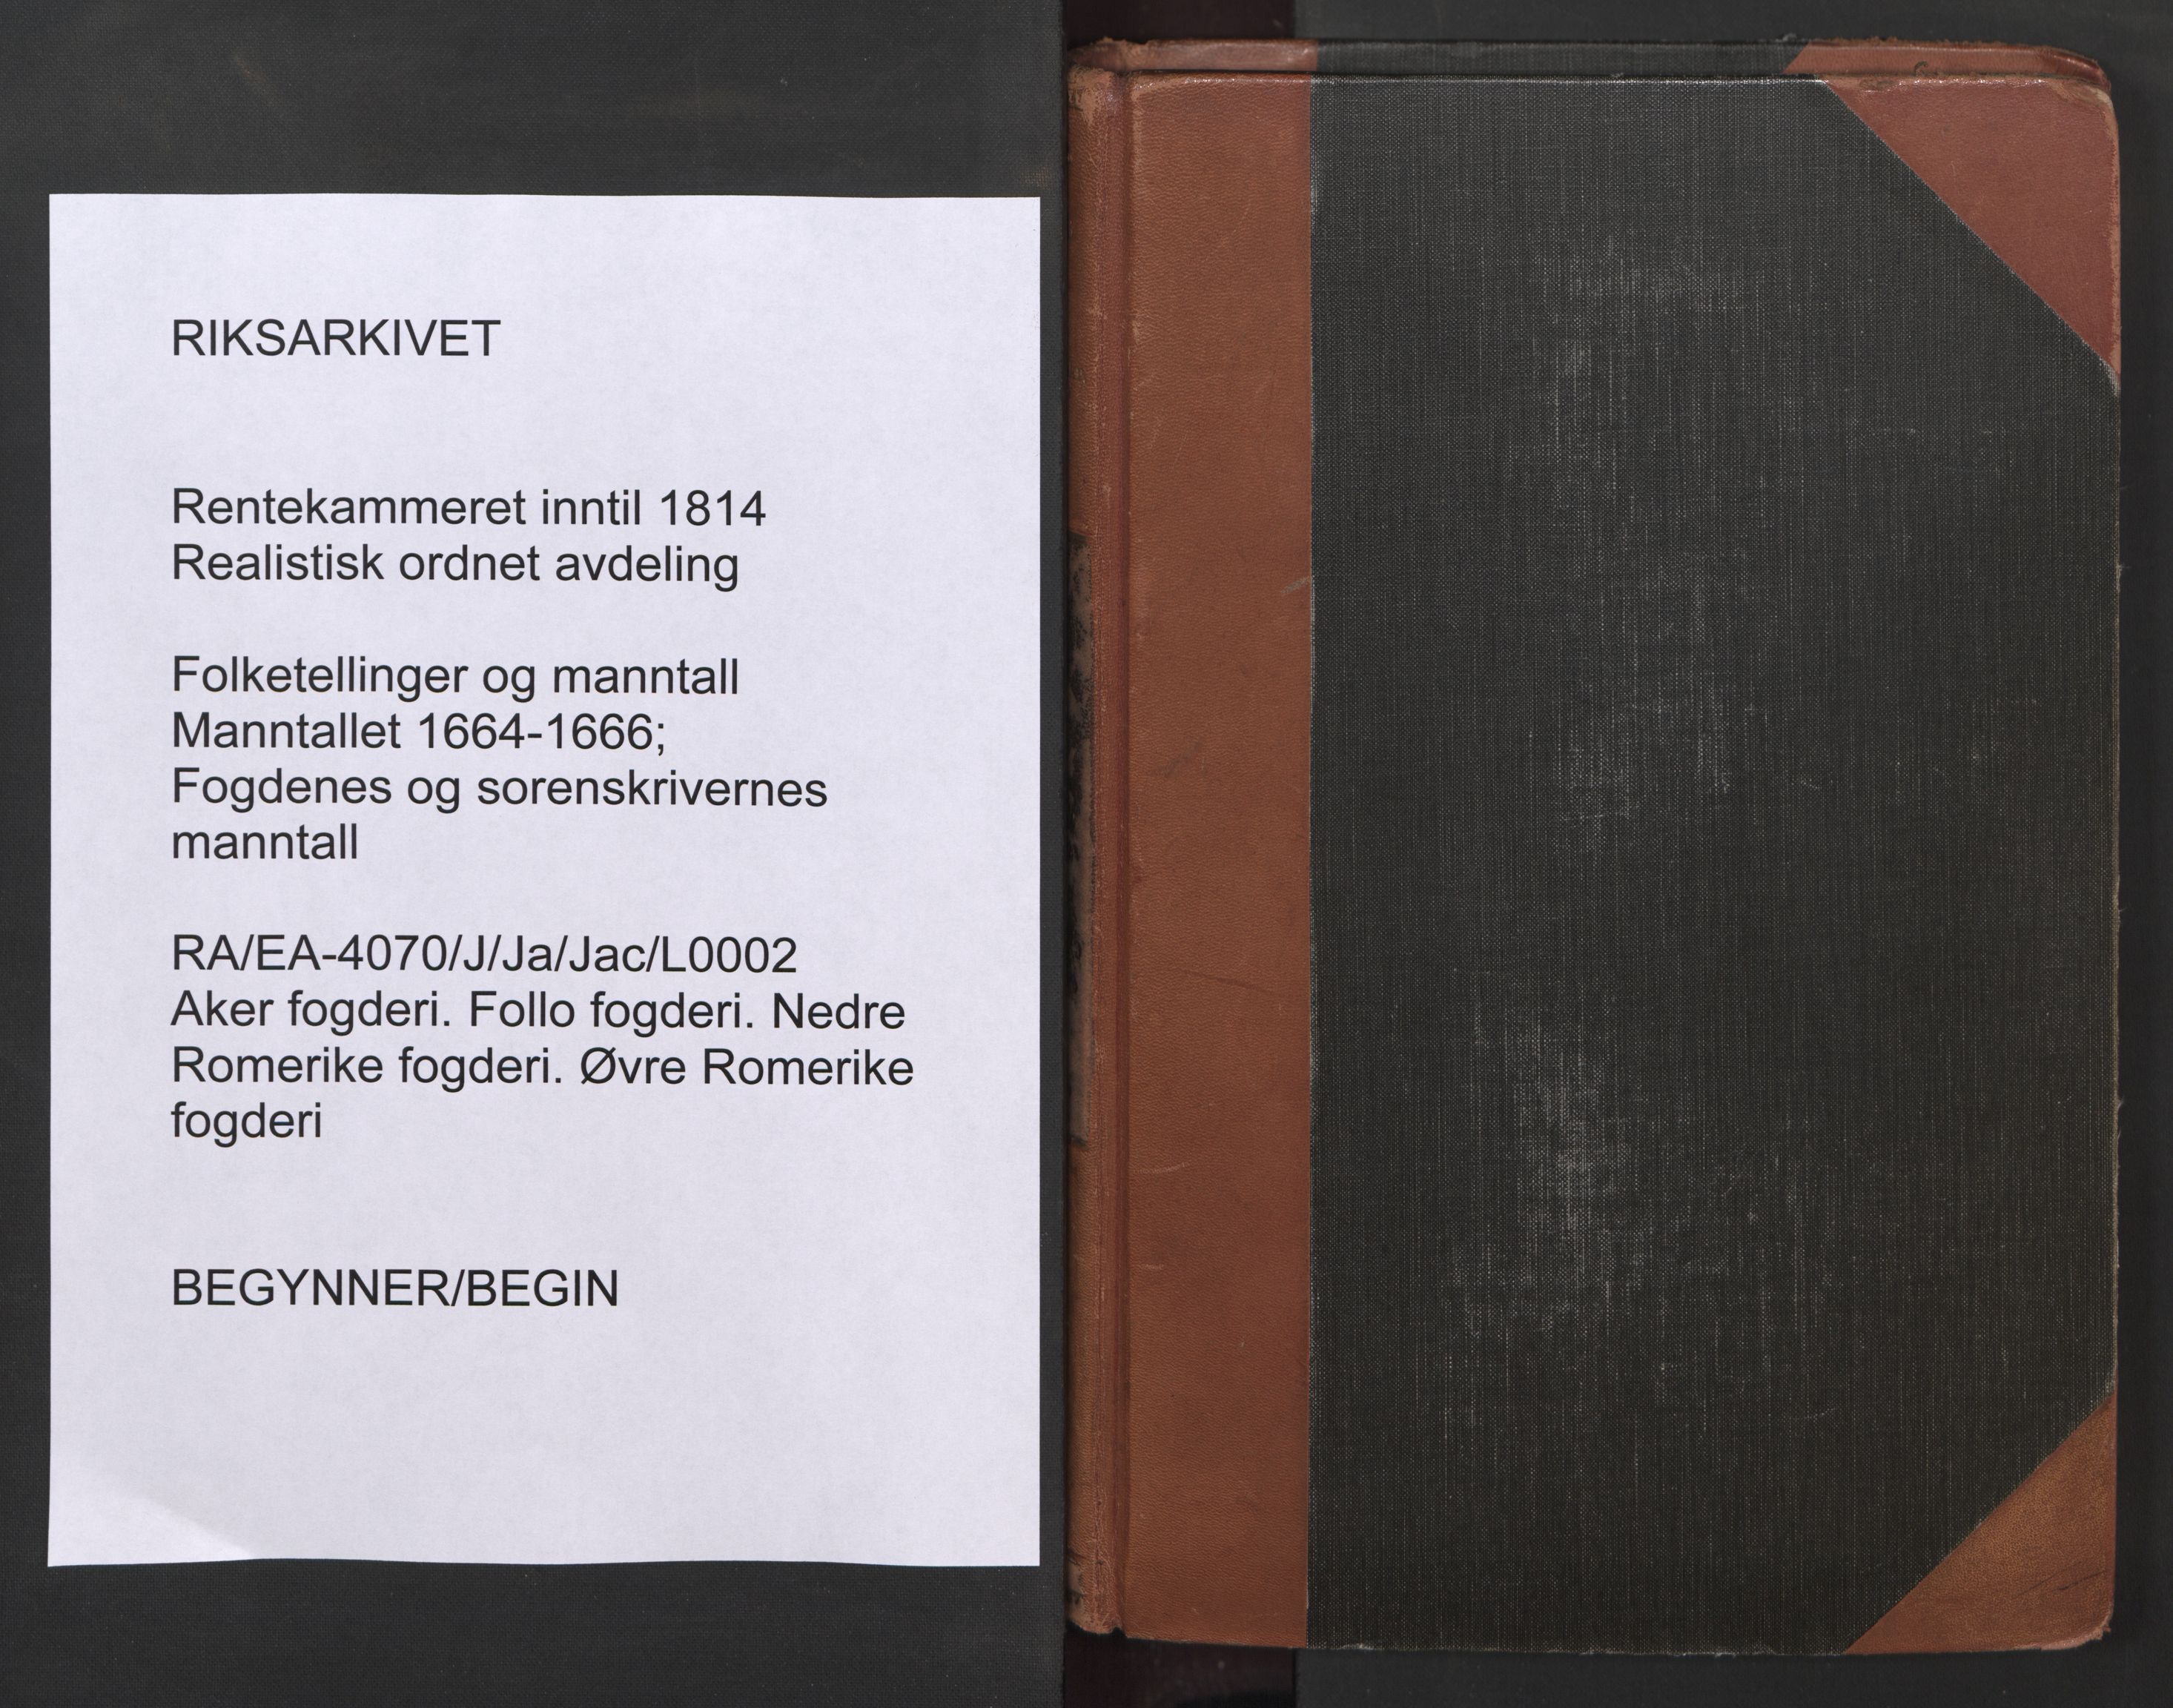 RA, Fogdenes og sorenskrivernes manntall 1664-1666, nr. 2: Aker fogderi, Follo fogderi, Nedre Romerike fogderi og Øvre Romerike fogderi, 1664